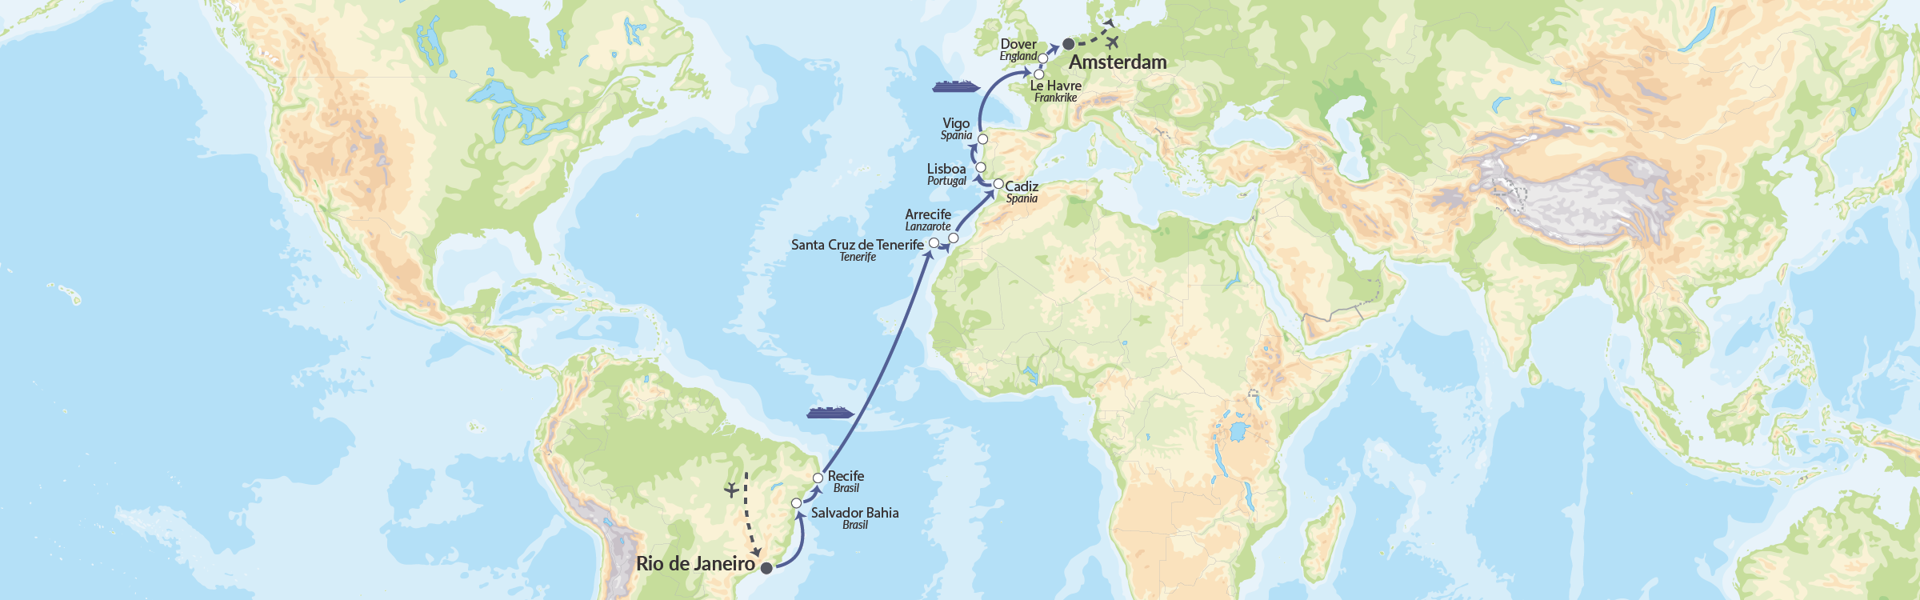 110890 Costa Favolosa 2MAI24 Transatlantisk Cruise Map